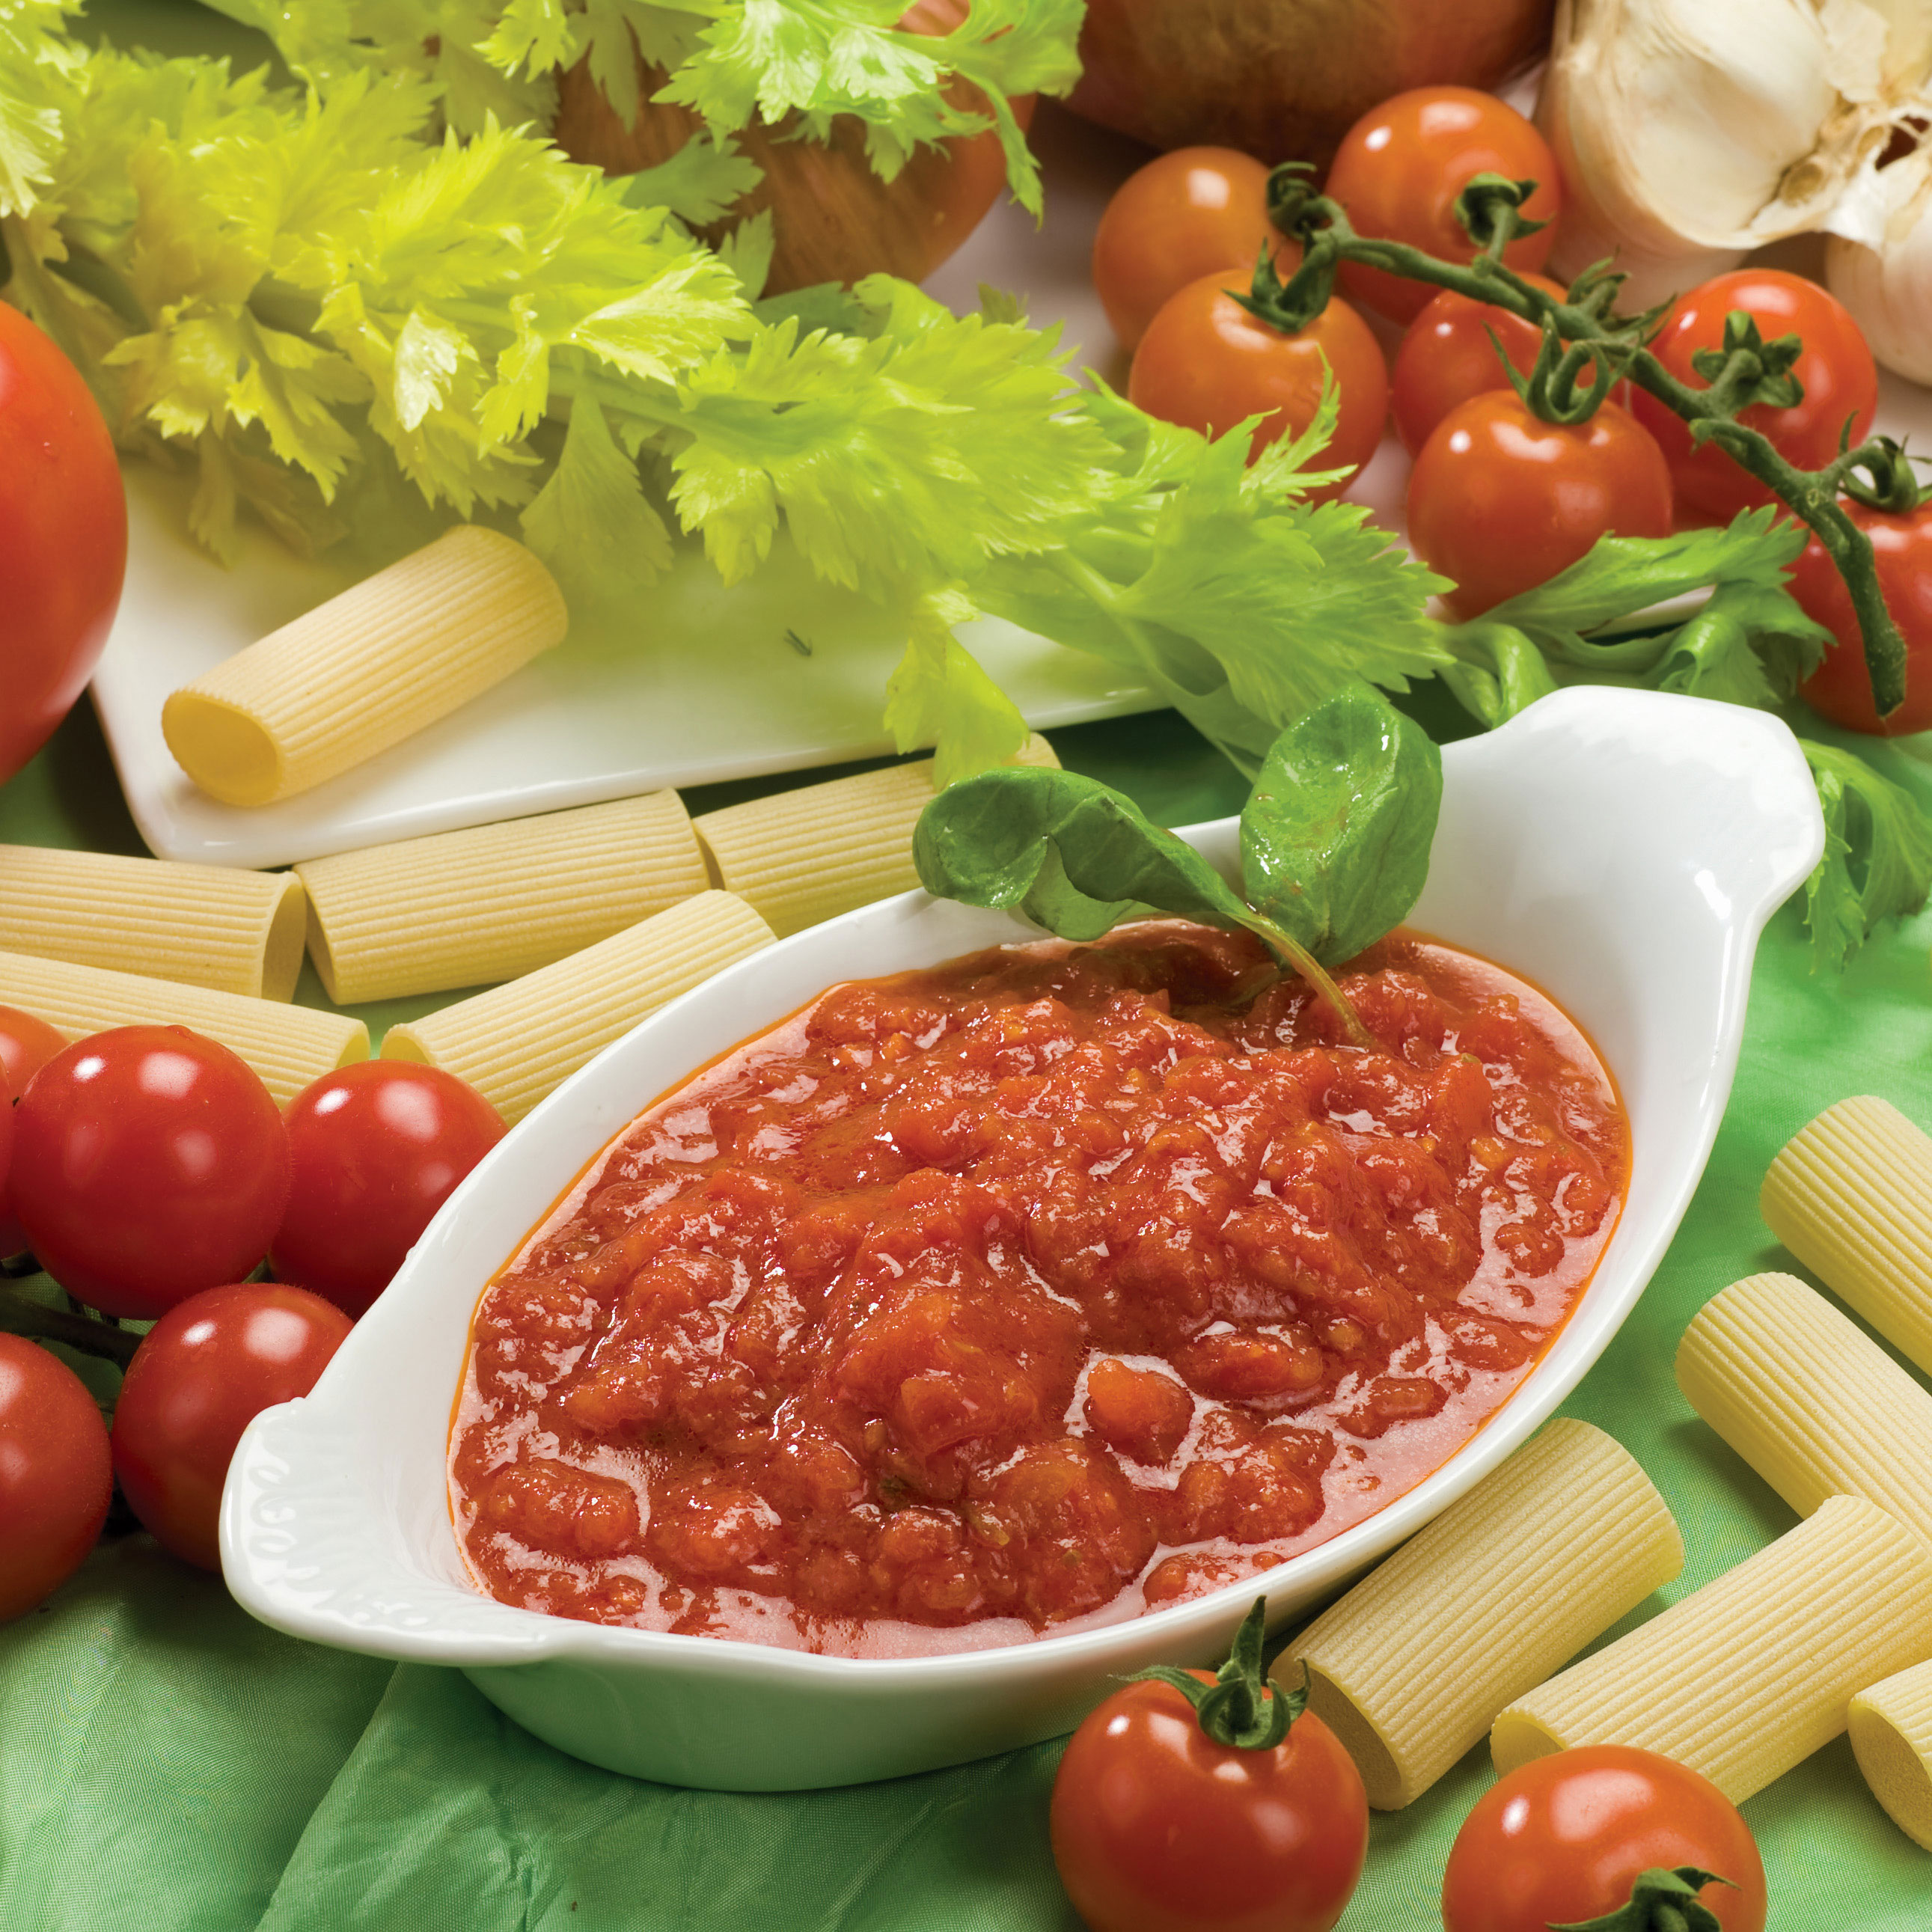 POMODORINA - Pasta Tomato Sauce Italy Condiments